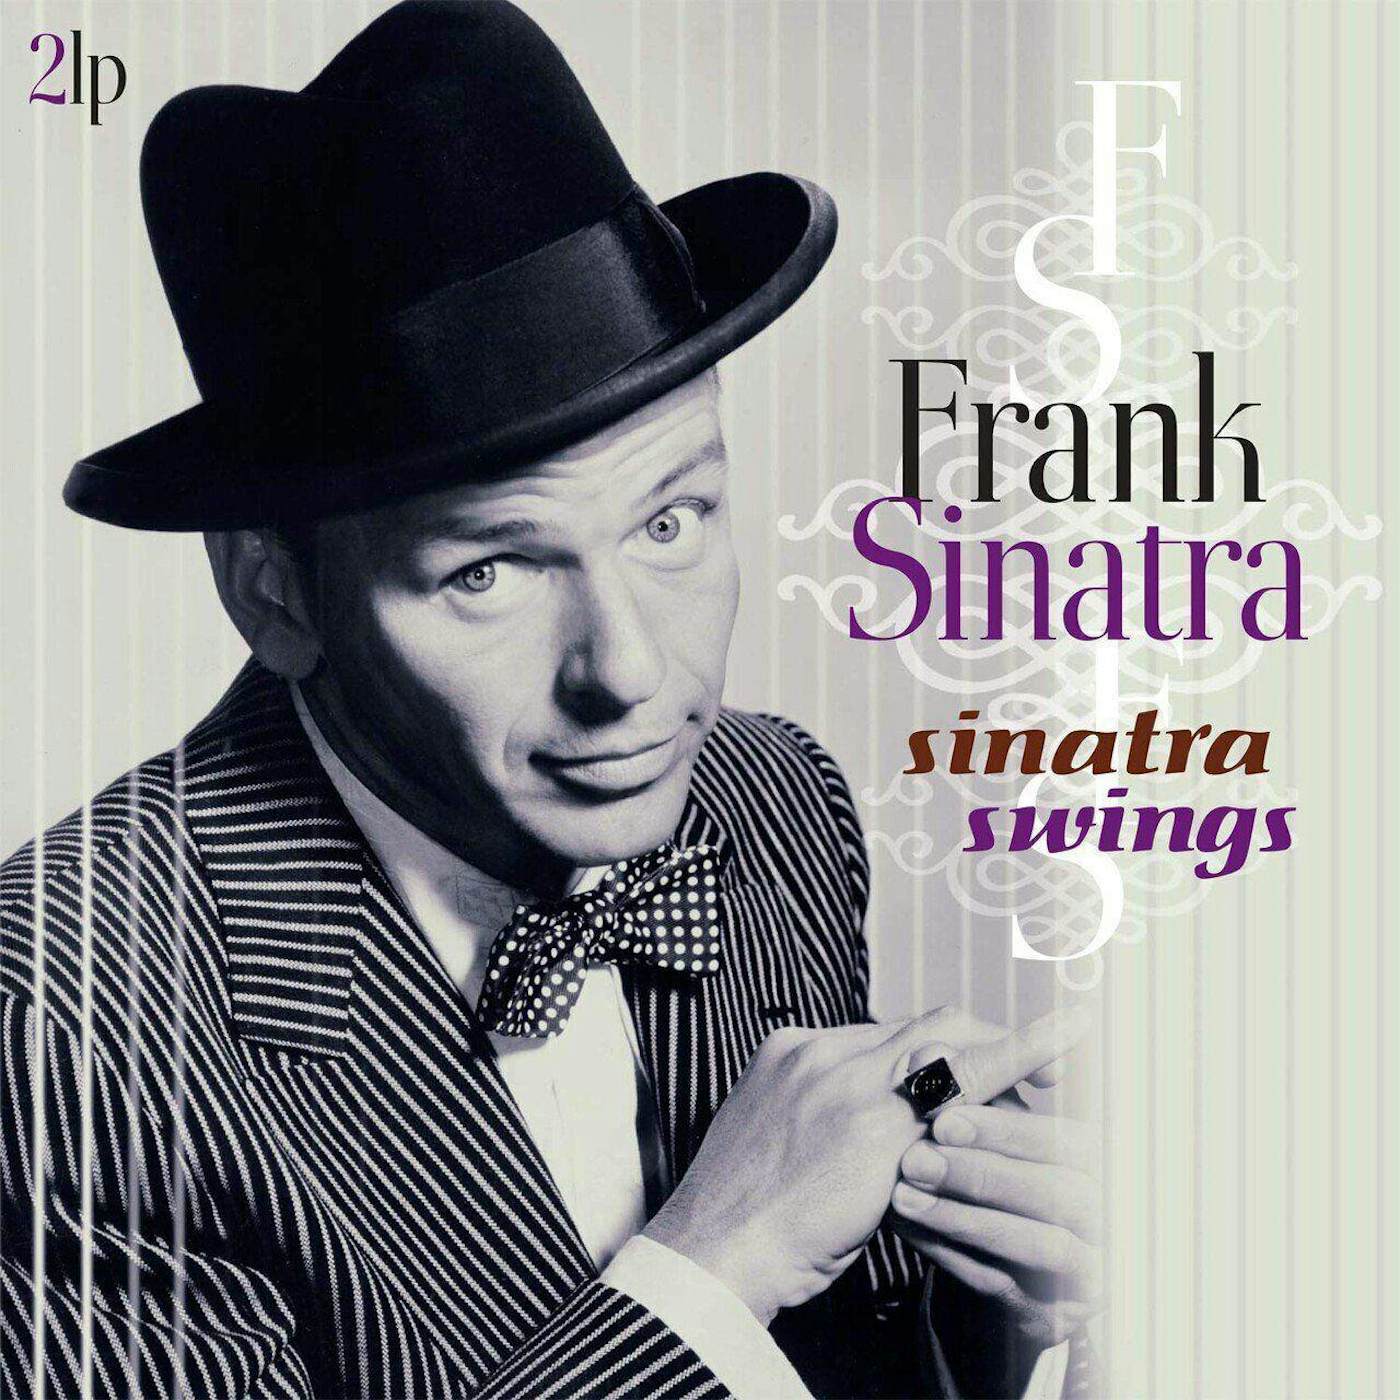 Frank Sinatra Sinatra Swings (Solid Purple) Vinyl Record